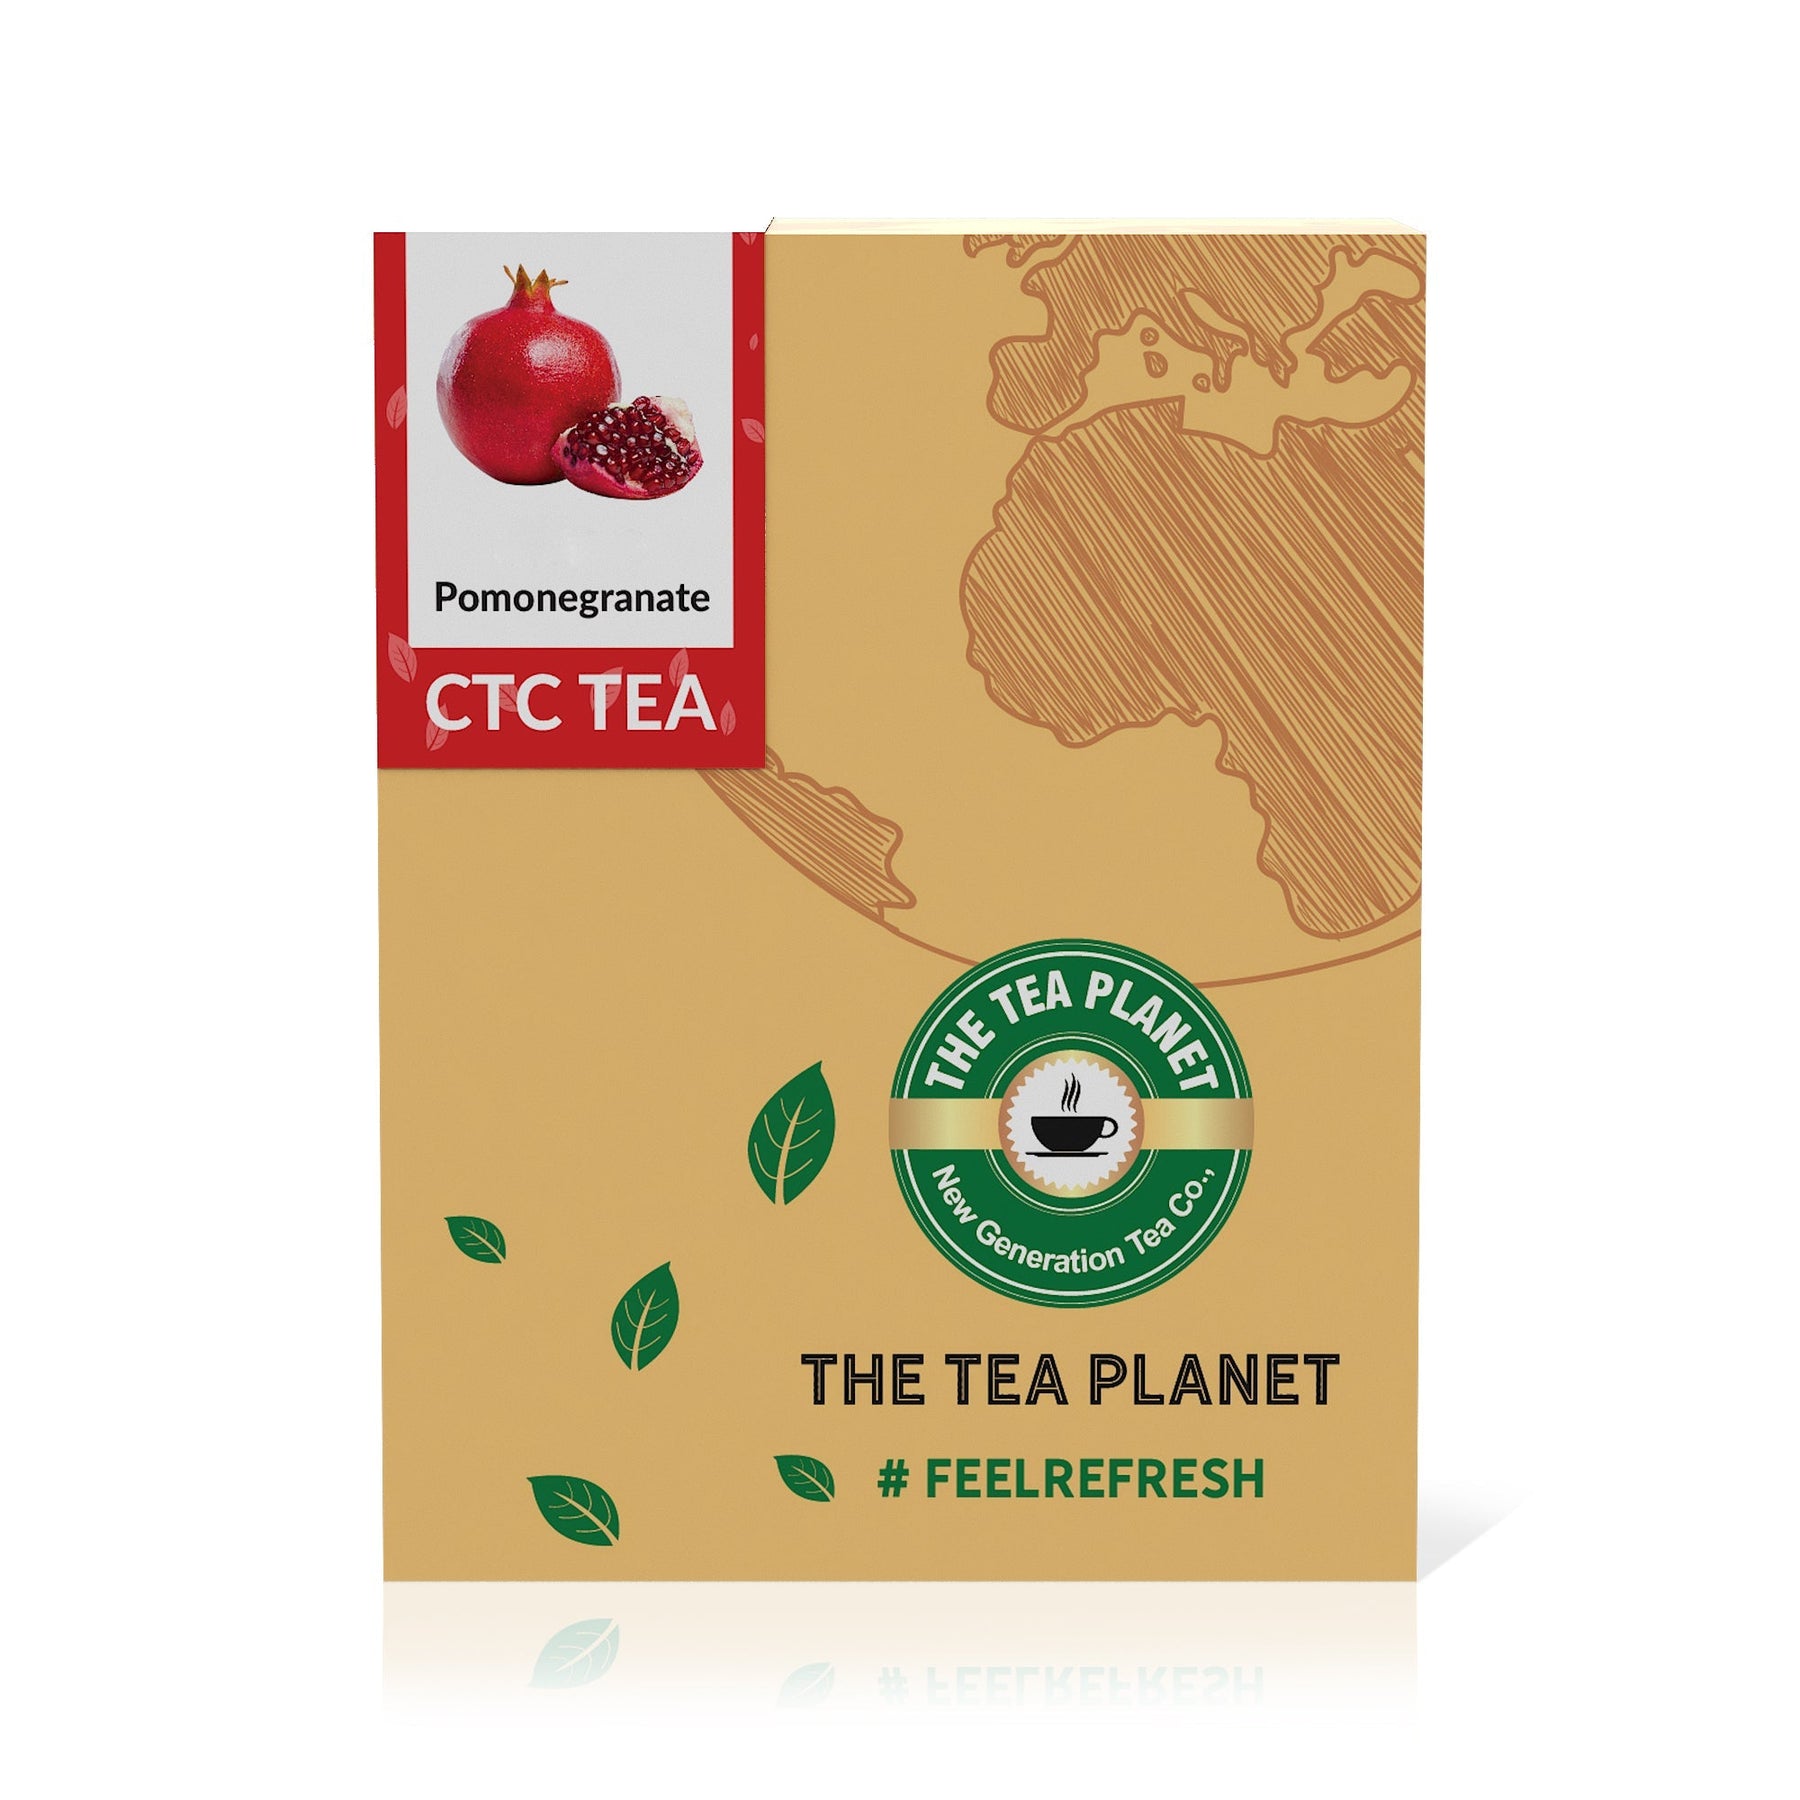 Pomonegranate Flavored CTC Tea 1